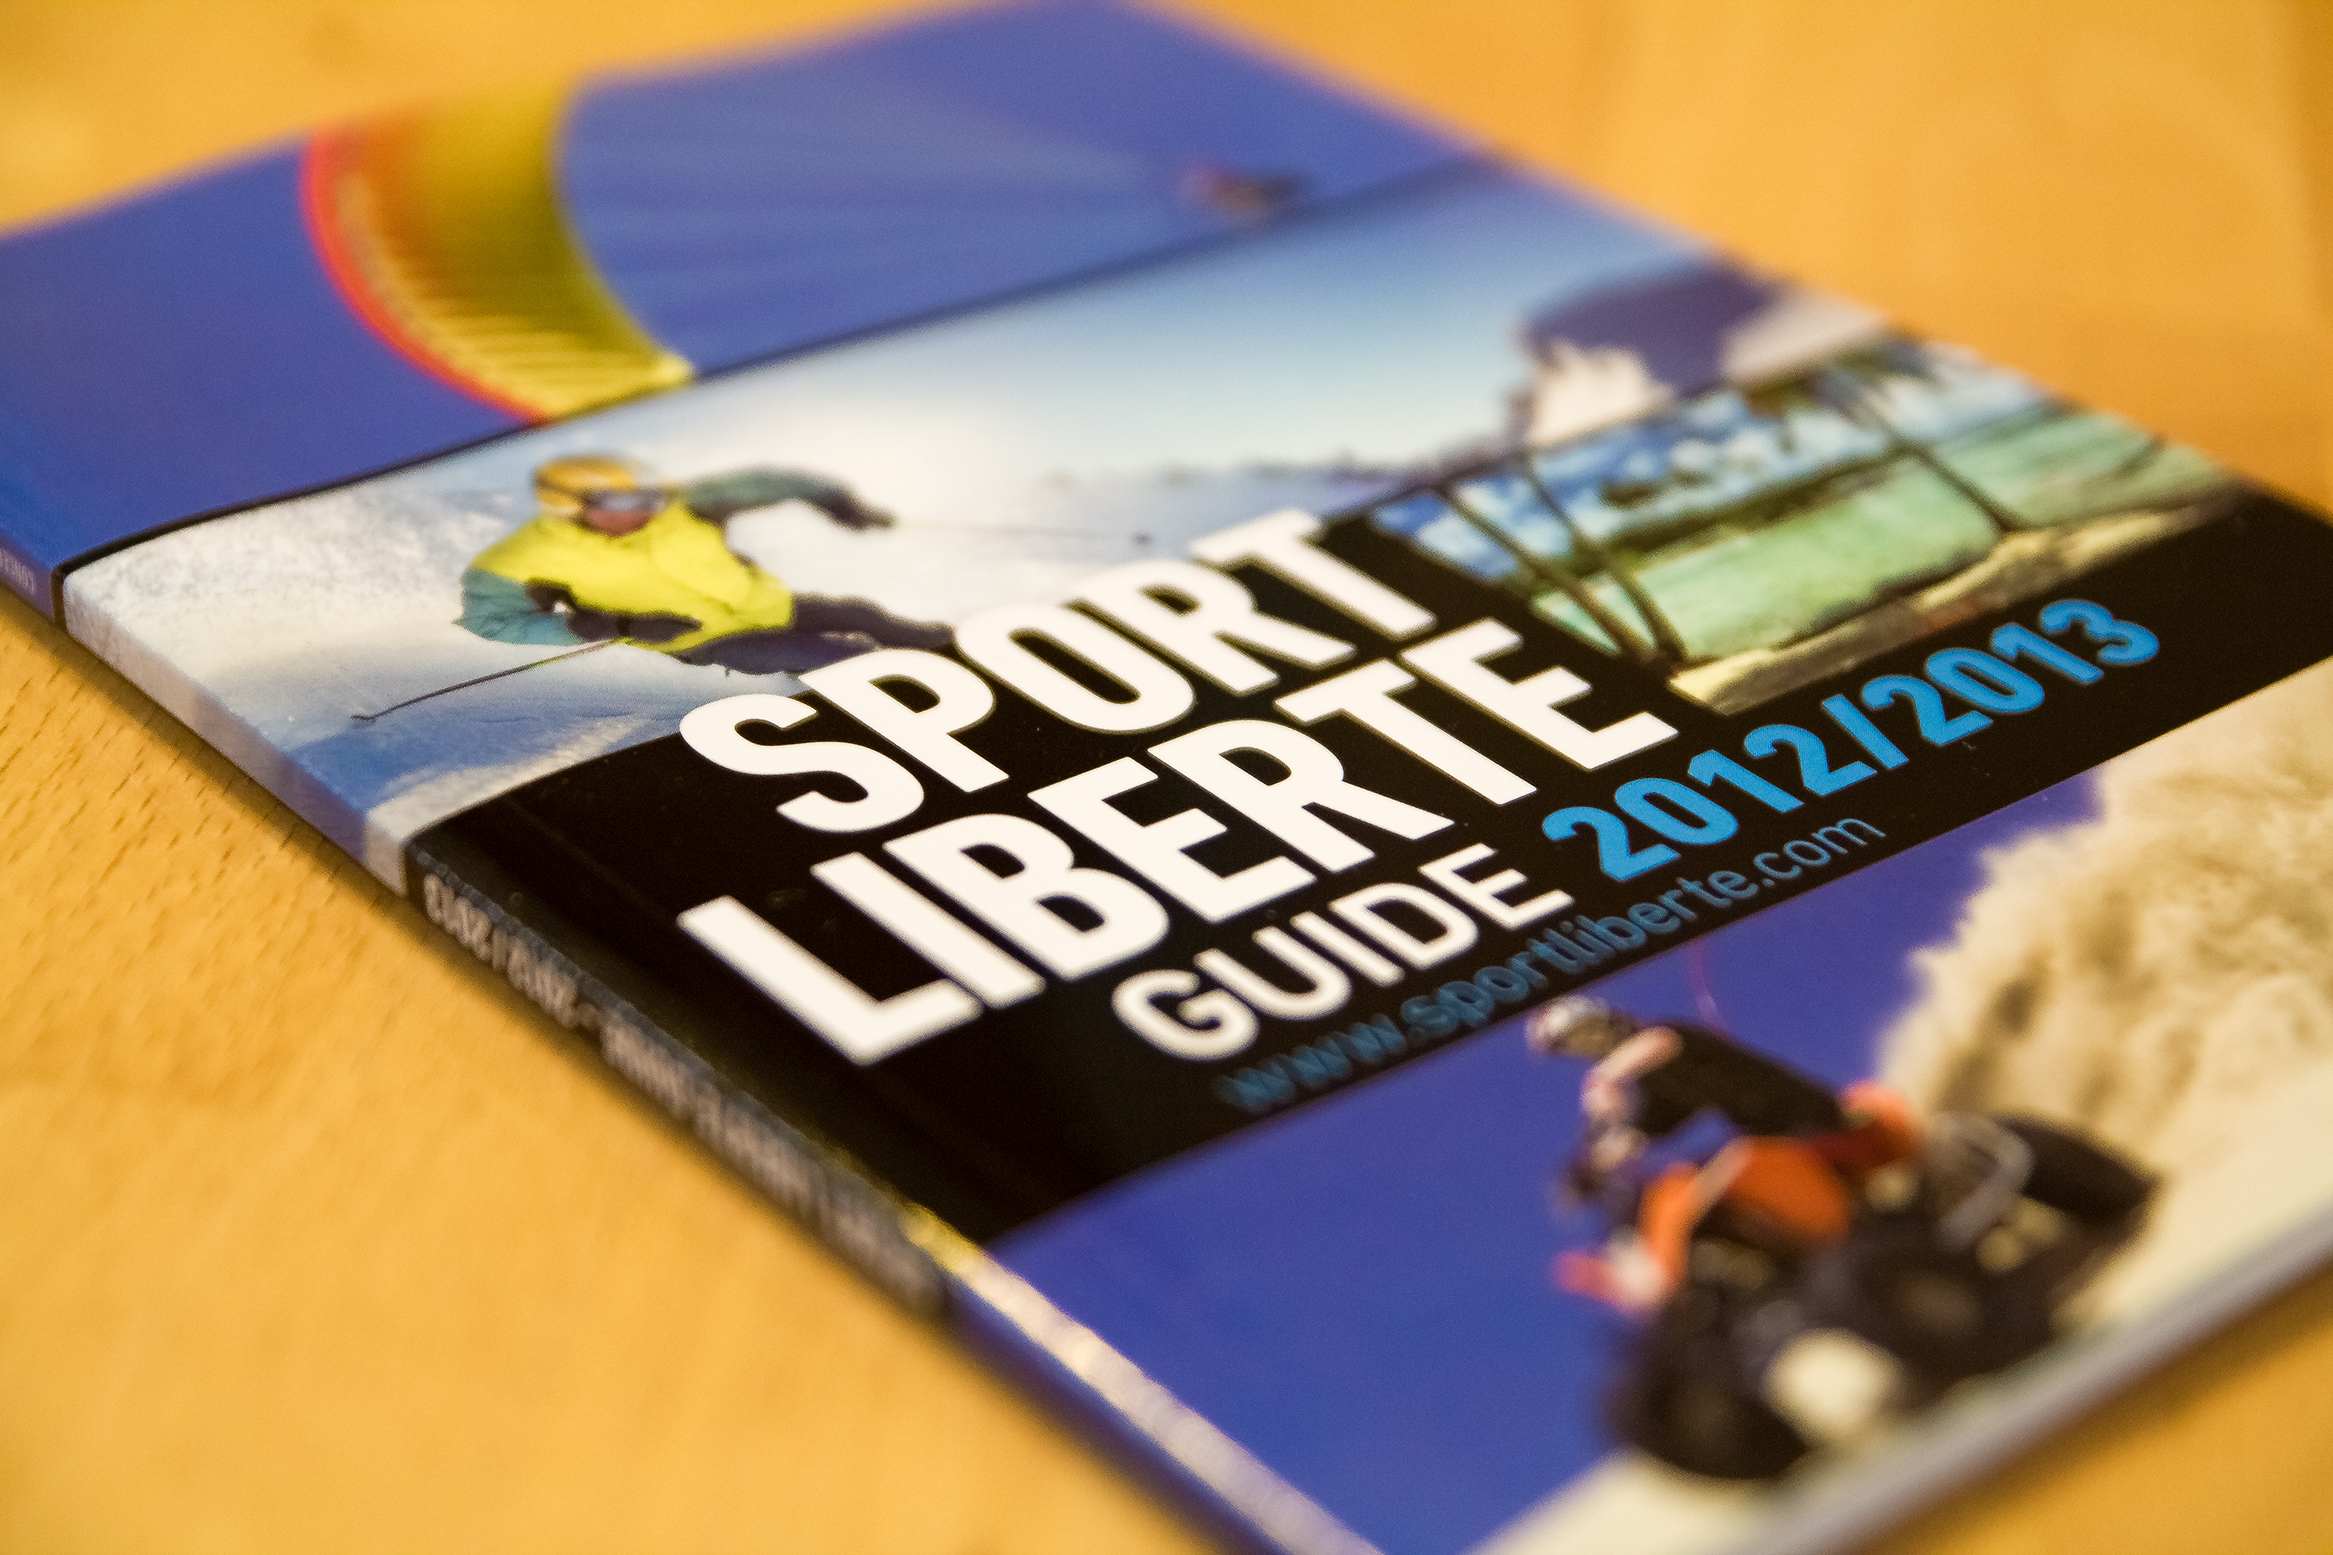 Sport Liberté, 2012/2013 catalogue cover.